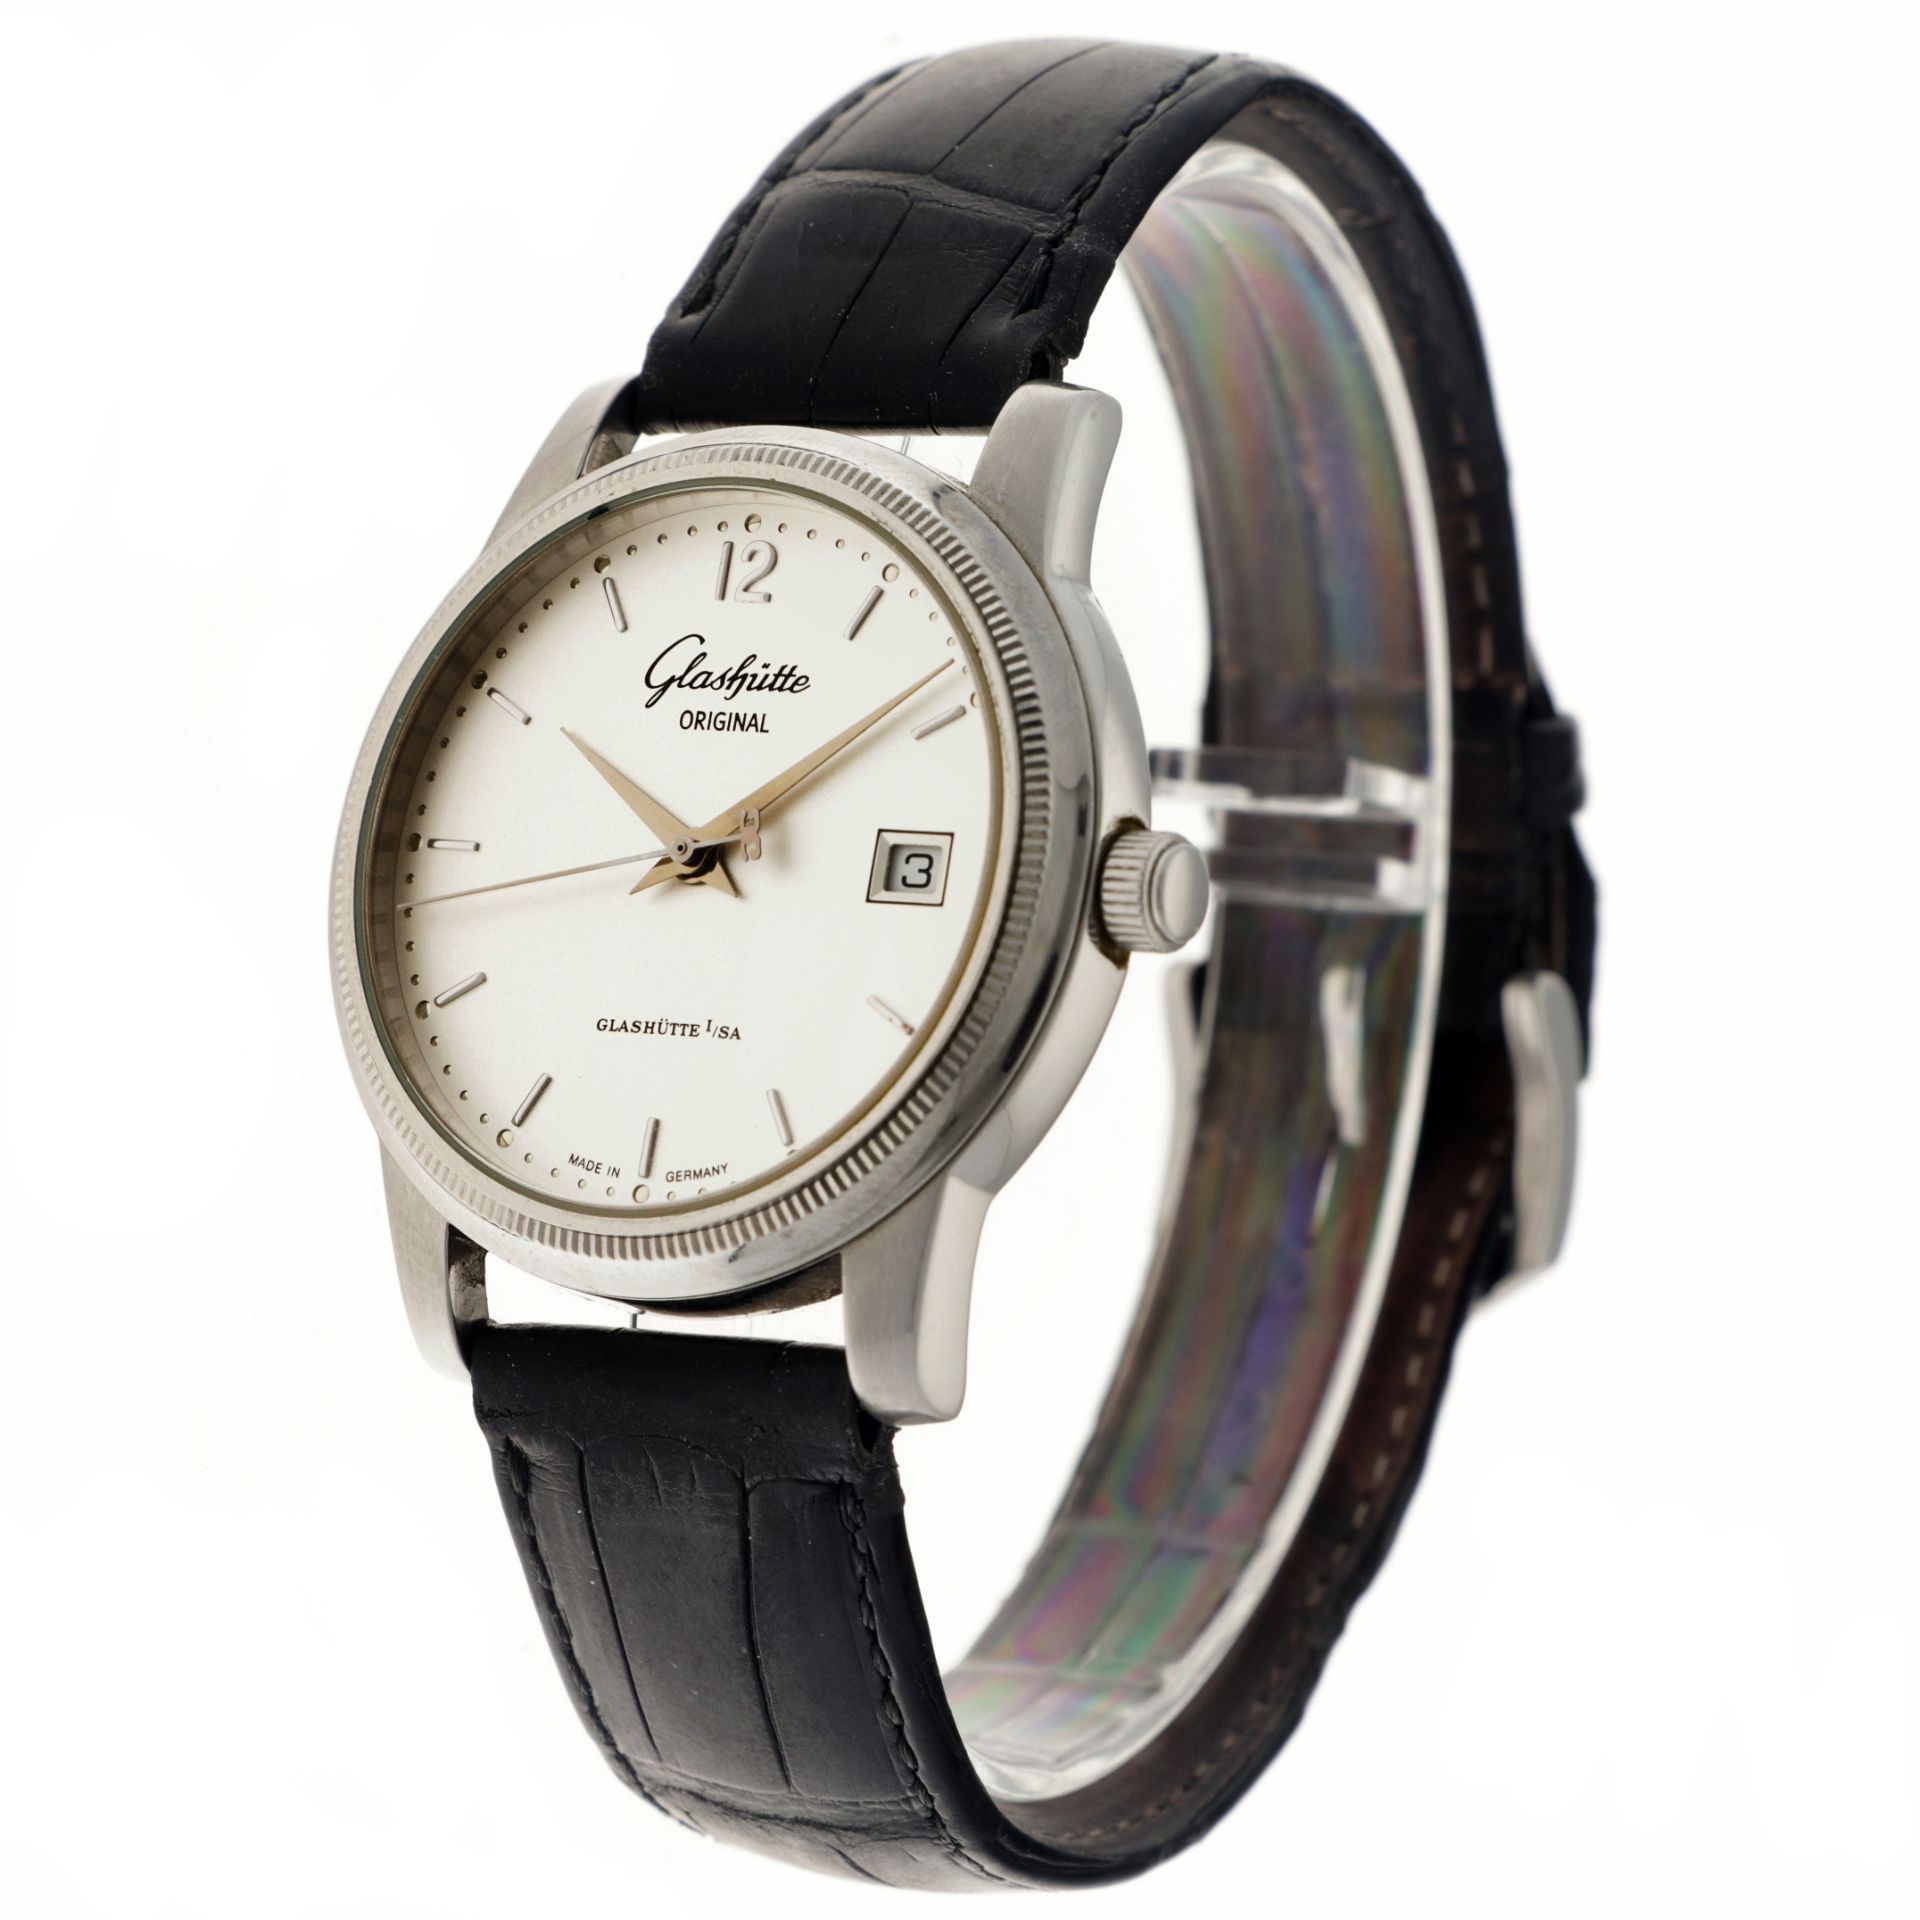 No Reserve - Glashütte Original Senator - Men's watch. - Image 2 of 5